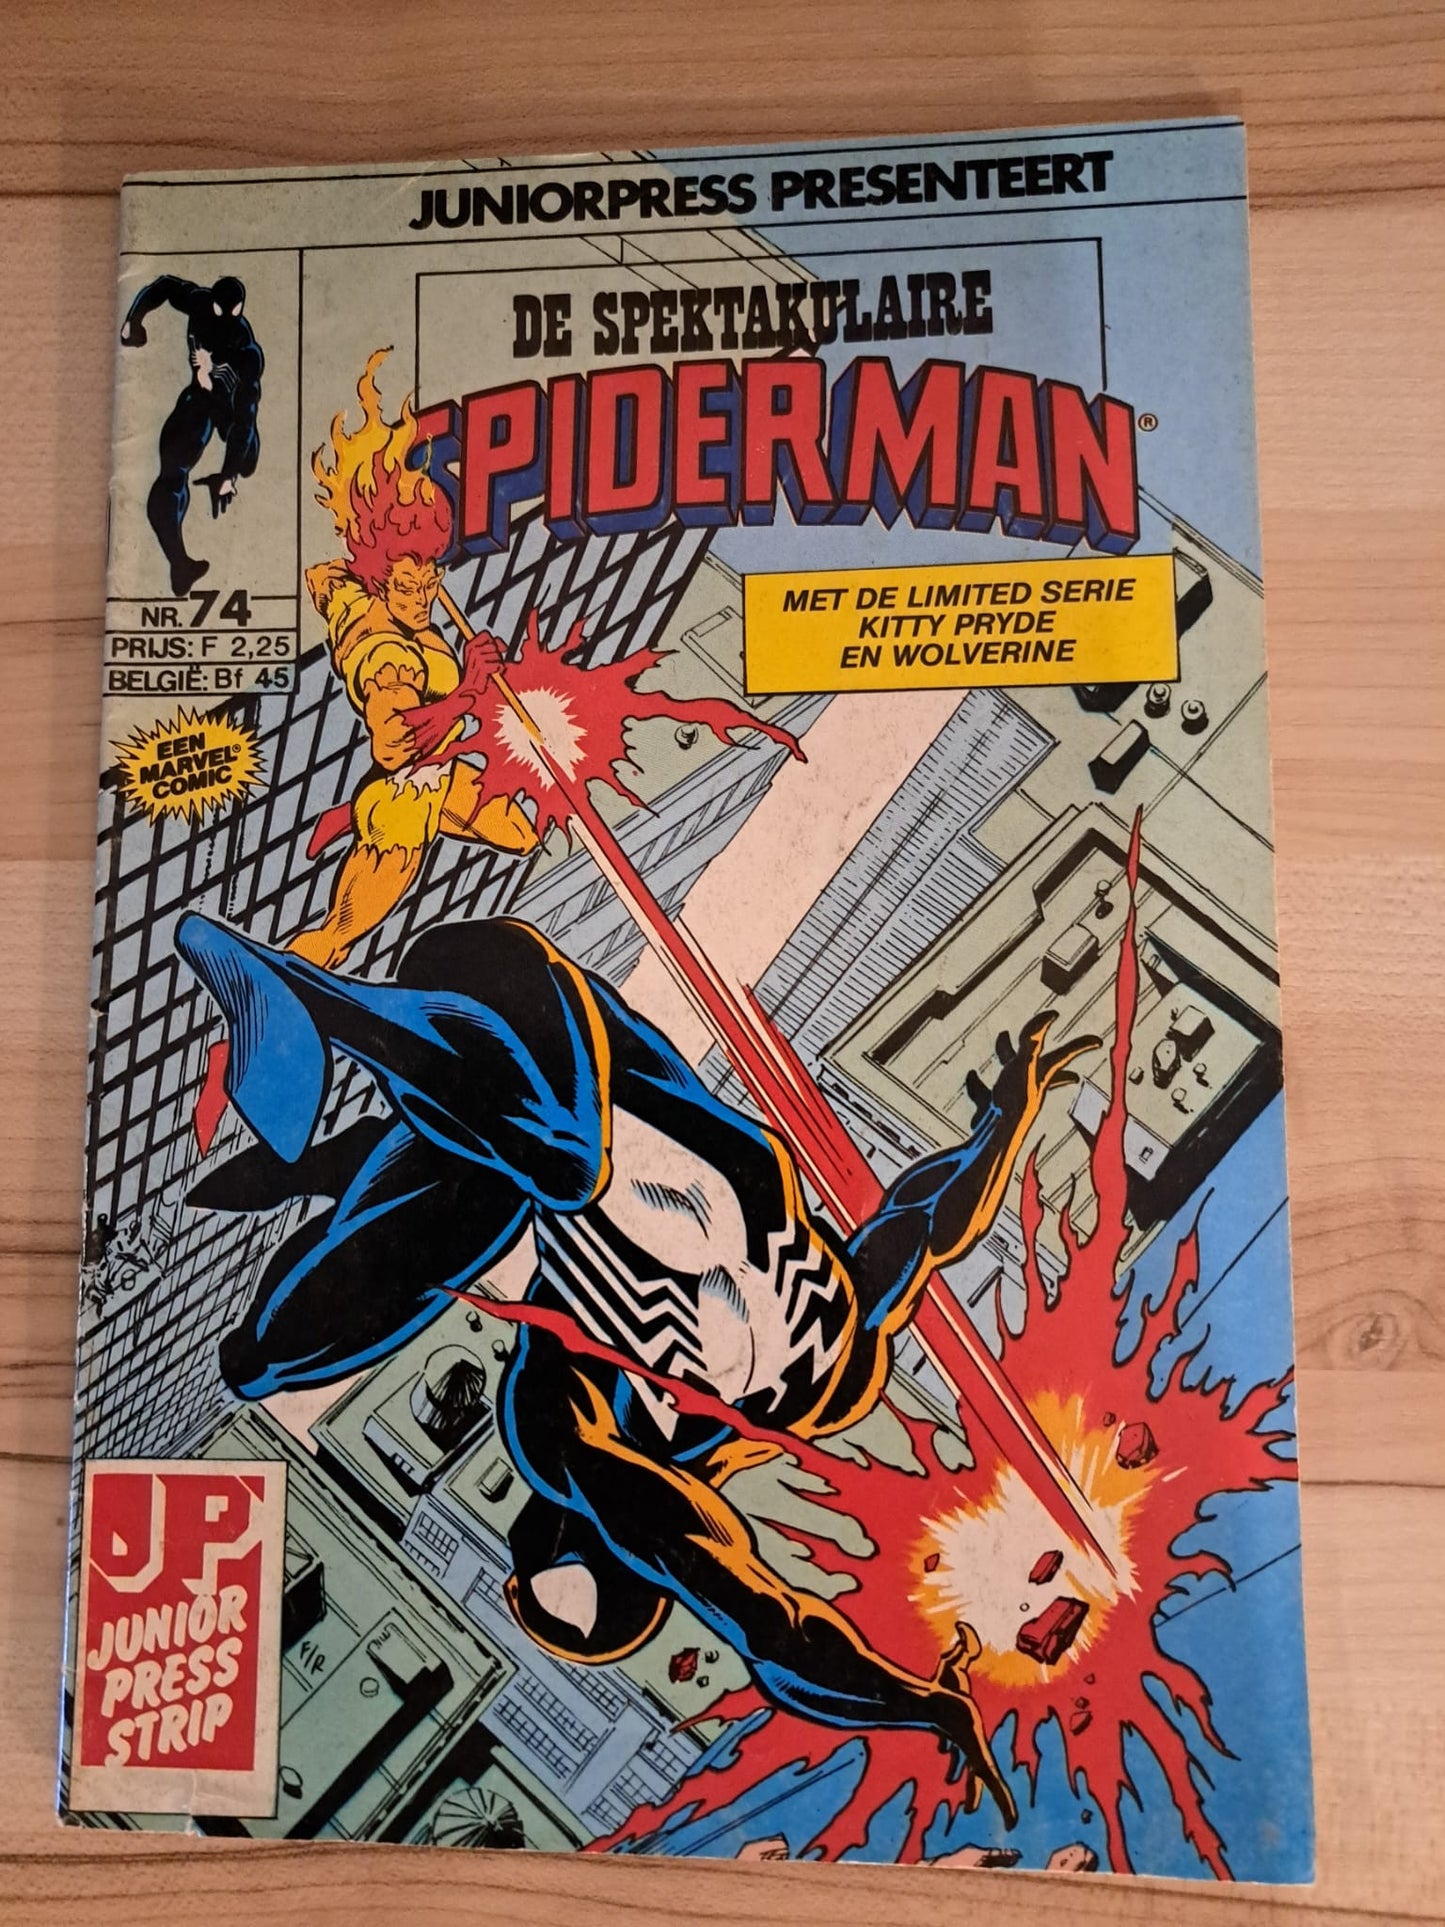 De spektakulaire spiderman #74